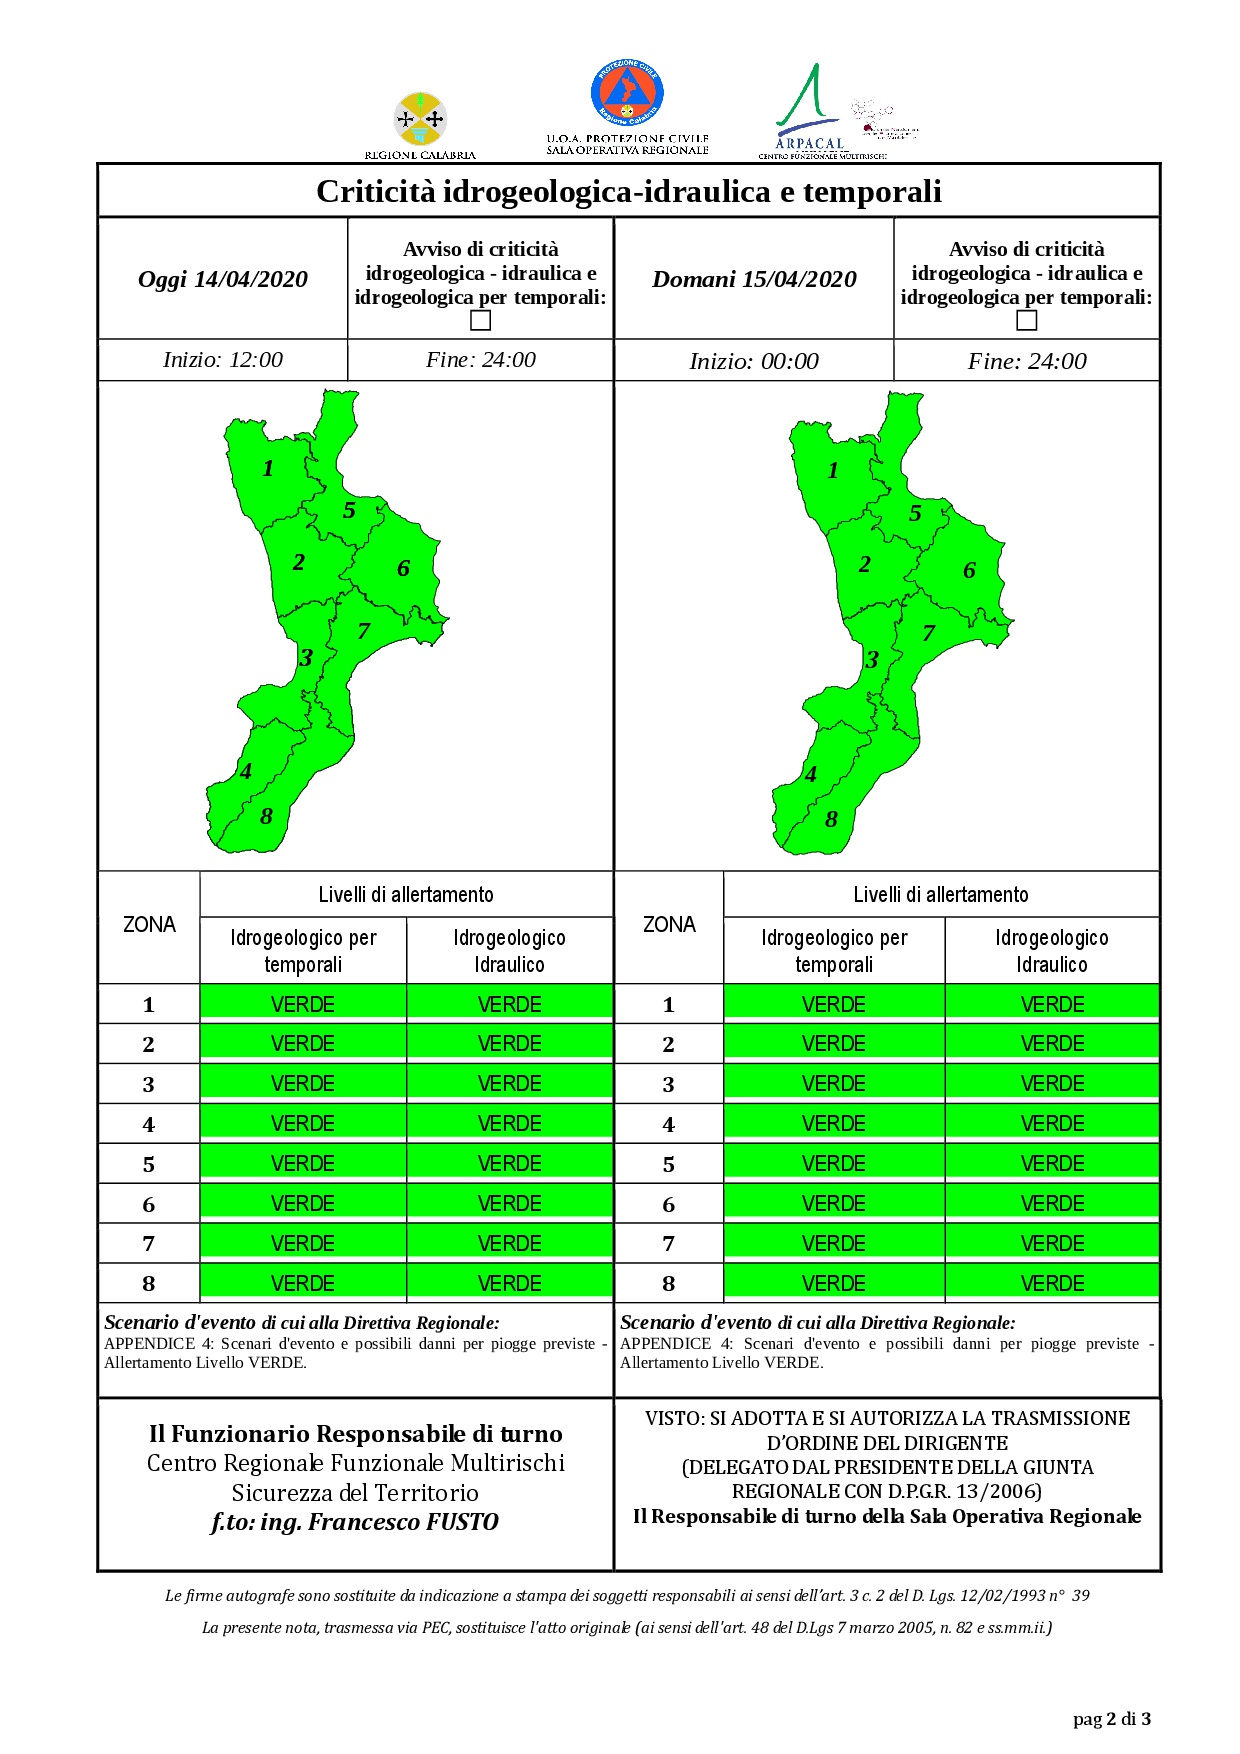 Criticità idrogeologica-idraulica e temporali in Calabria 14-04-2020